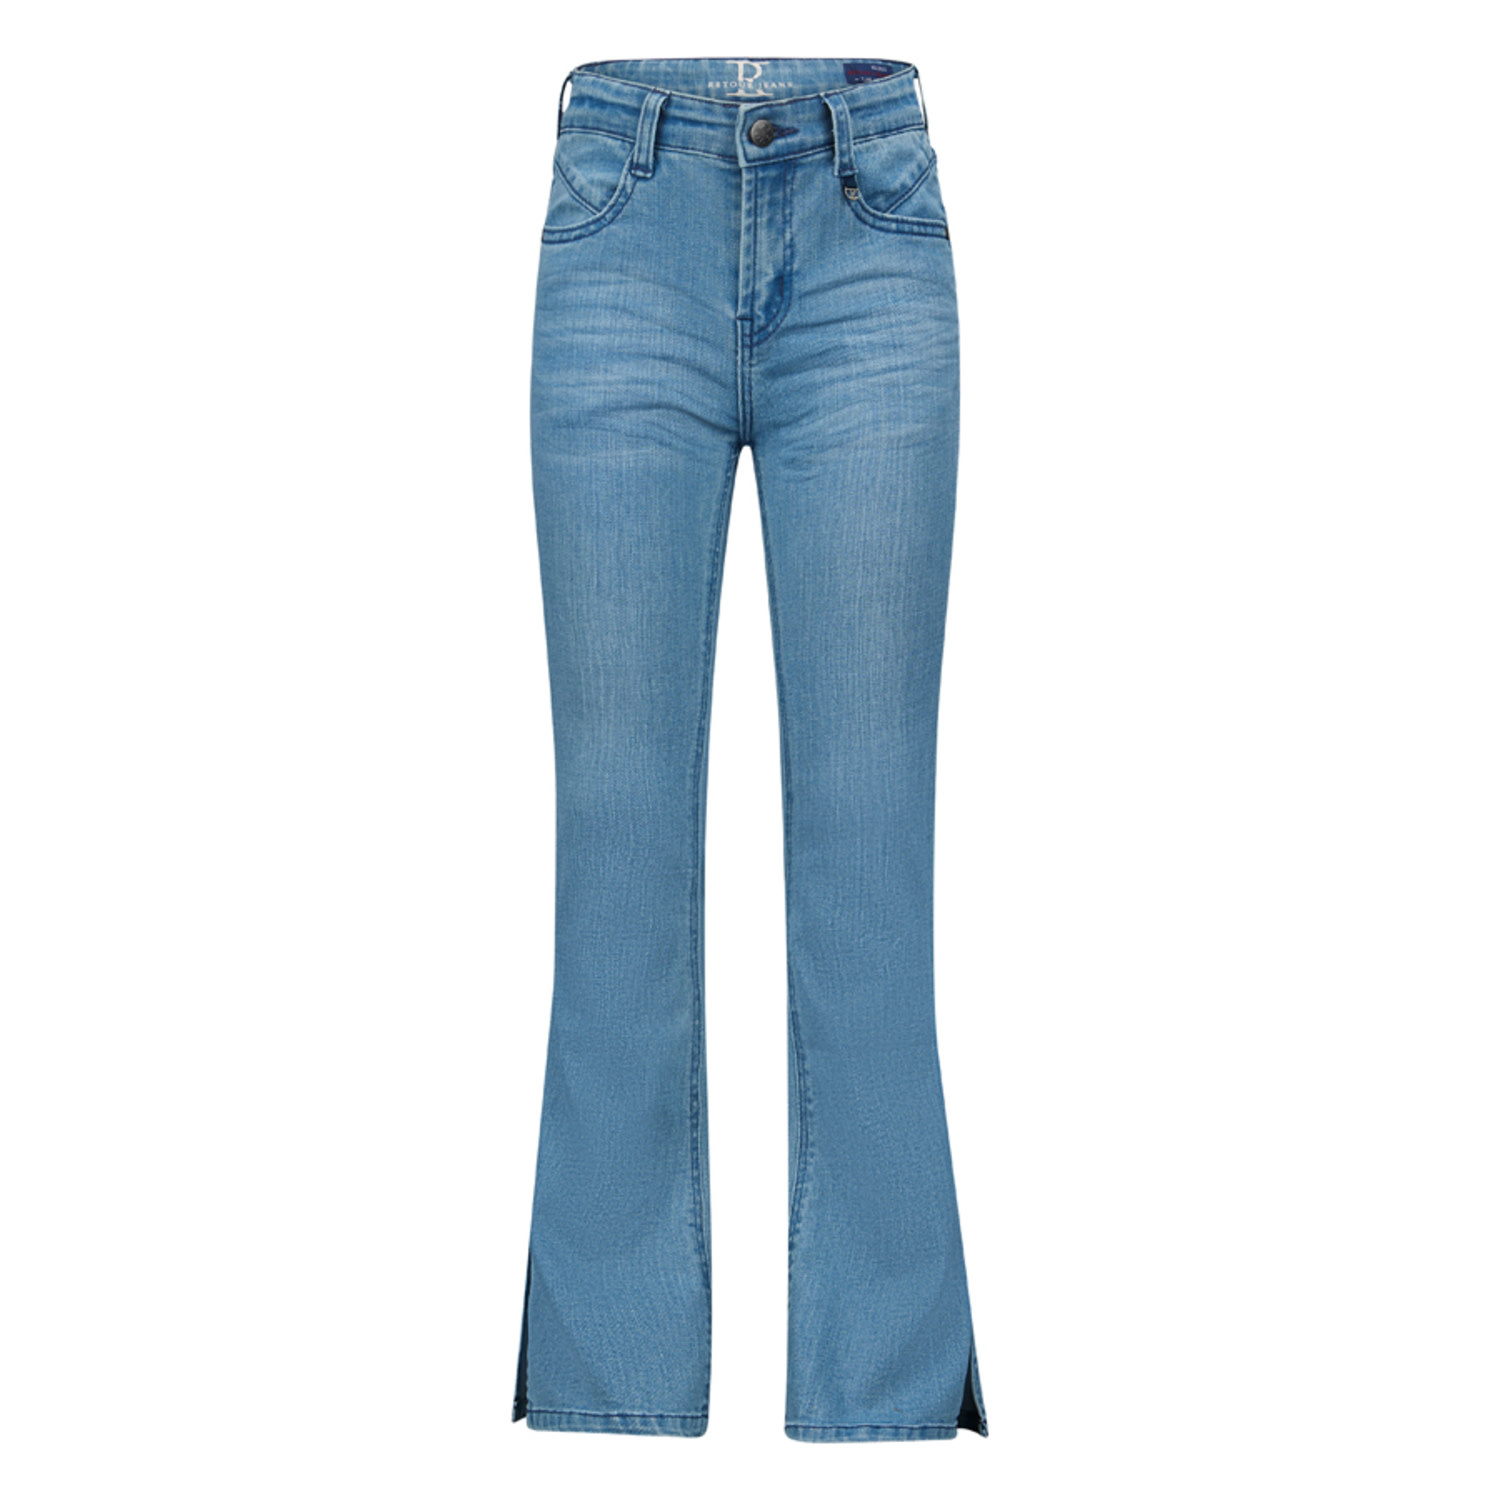 Afbeelding van Retour Meiden flared pants jeans anouk light indigo denim